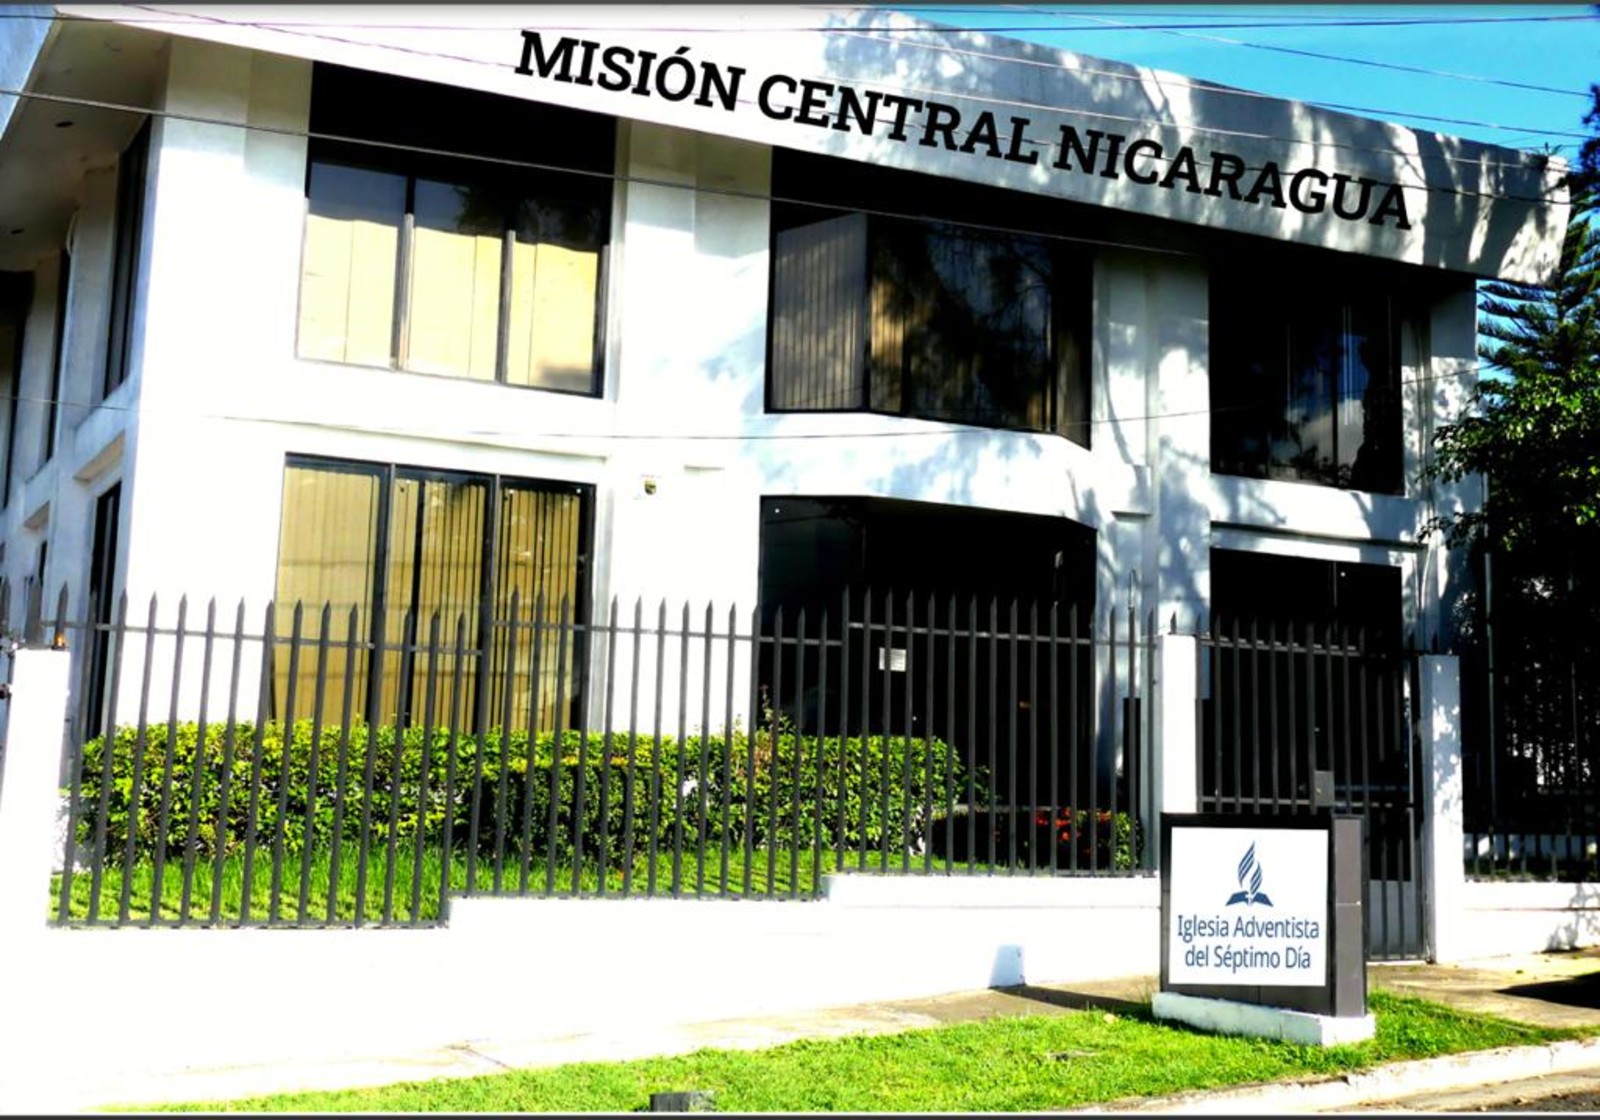 ESDA | Central Nicaragua Mission